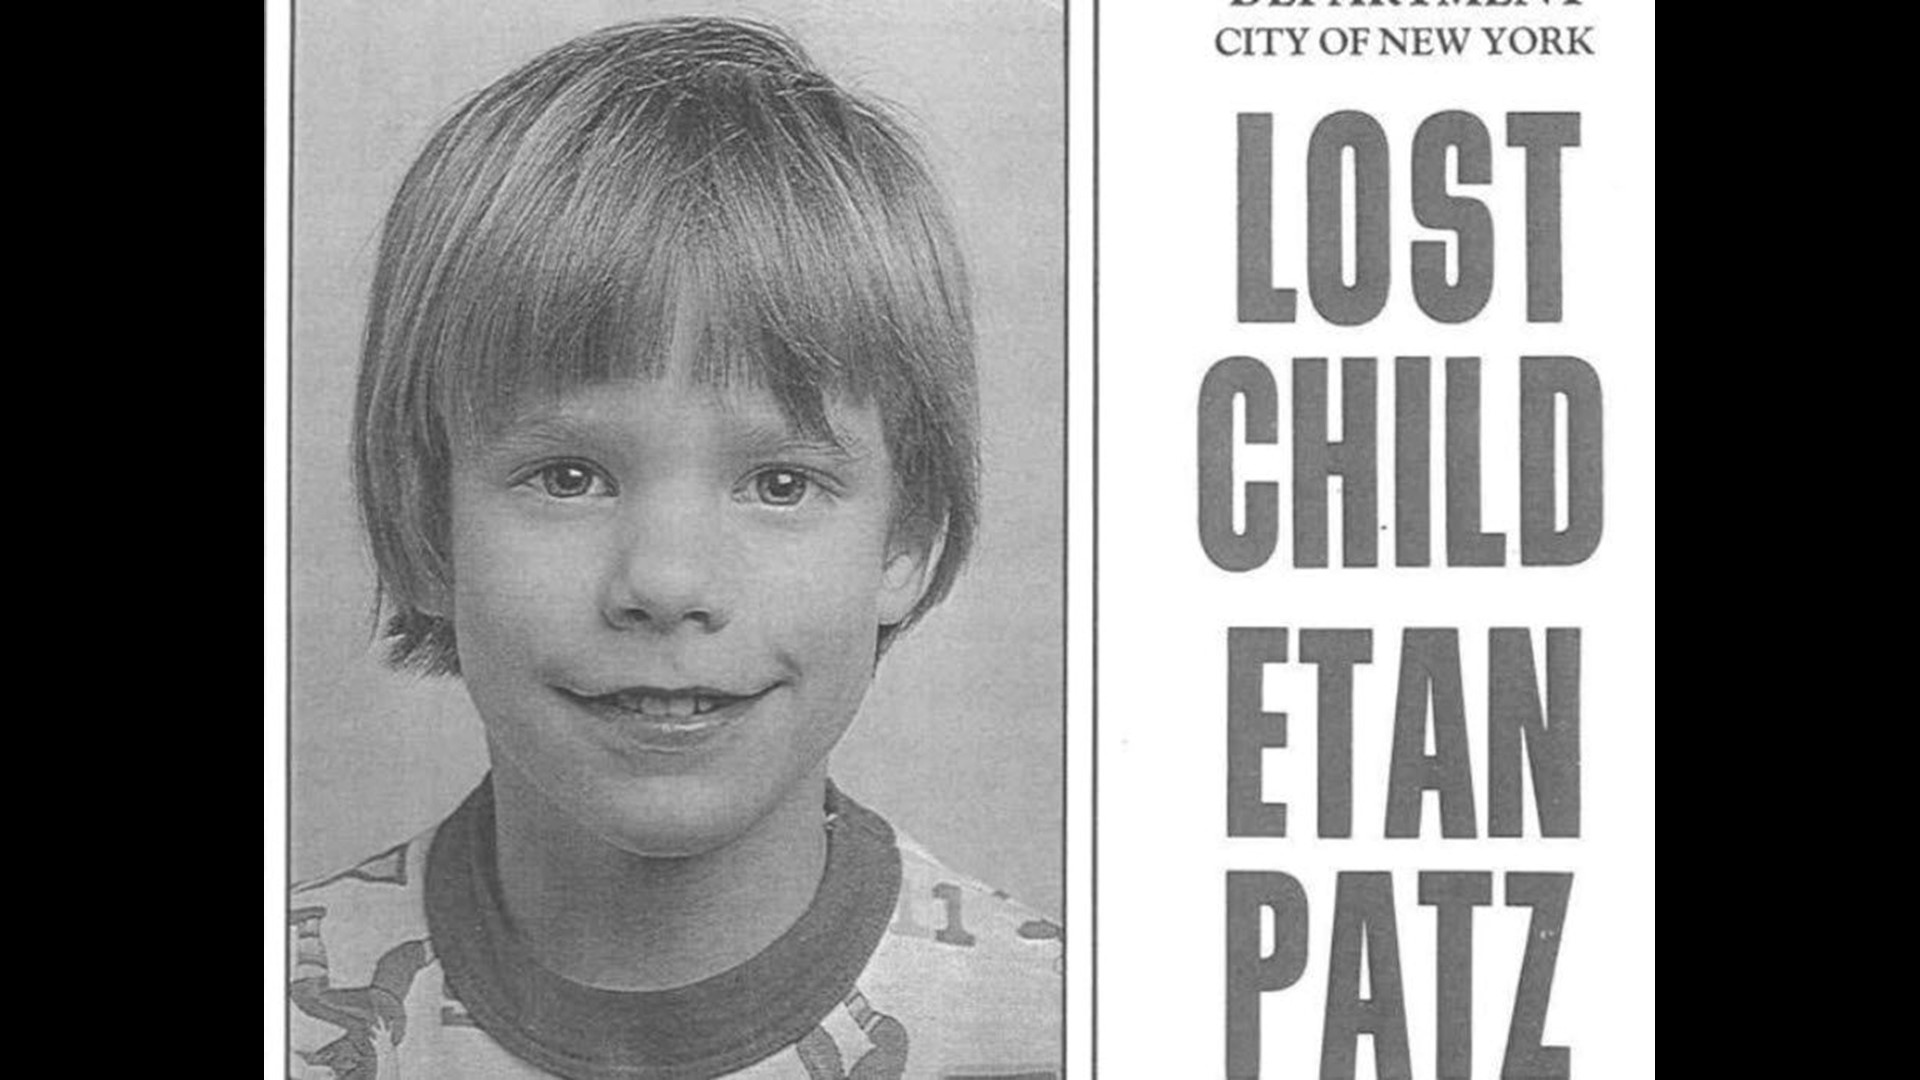 Missing child. Педро Эрнандес Итан Патц. Патц. Missing children.